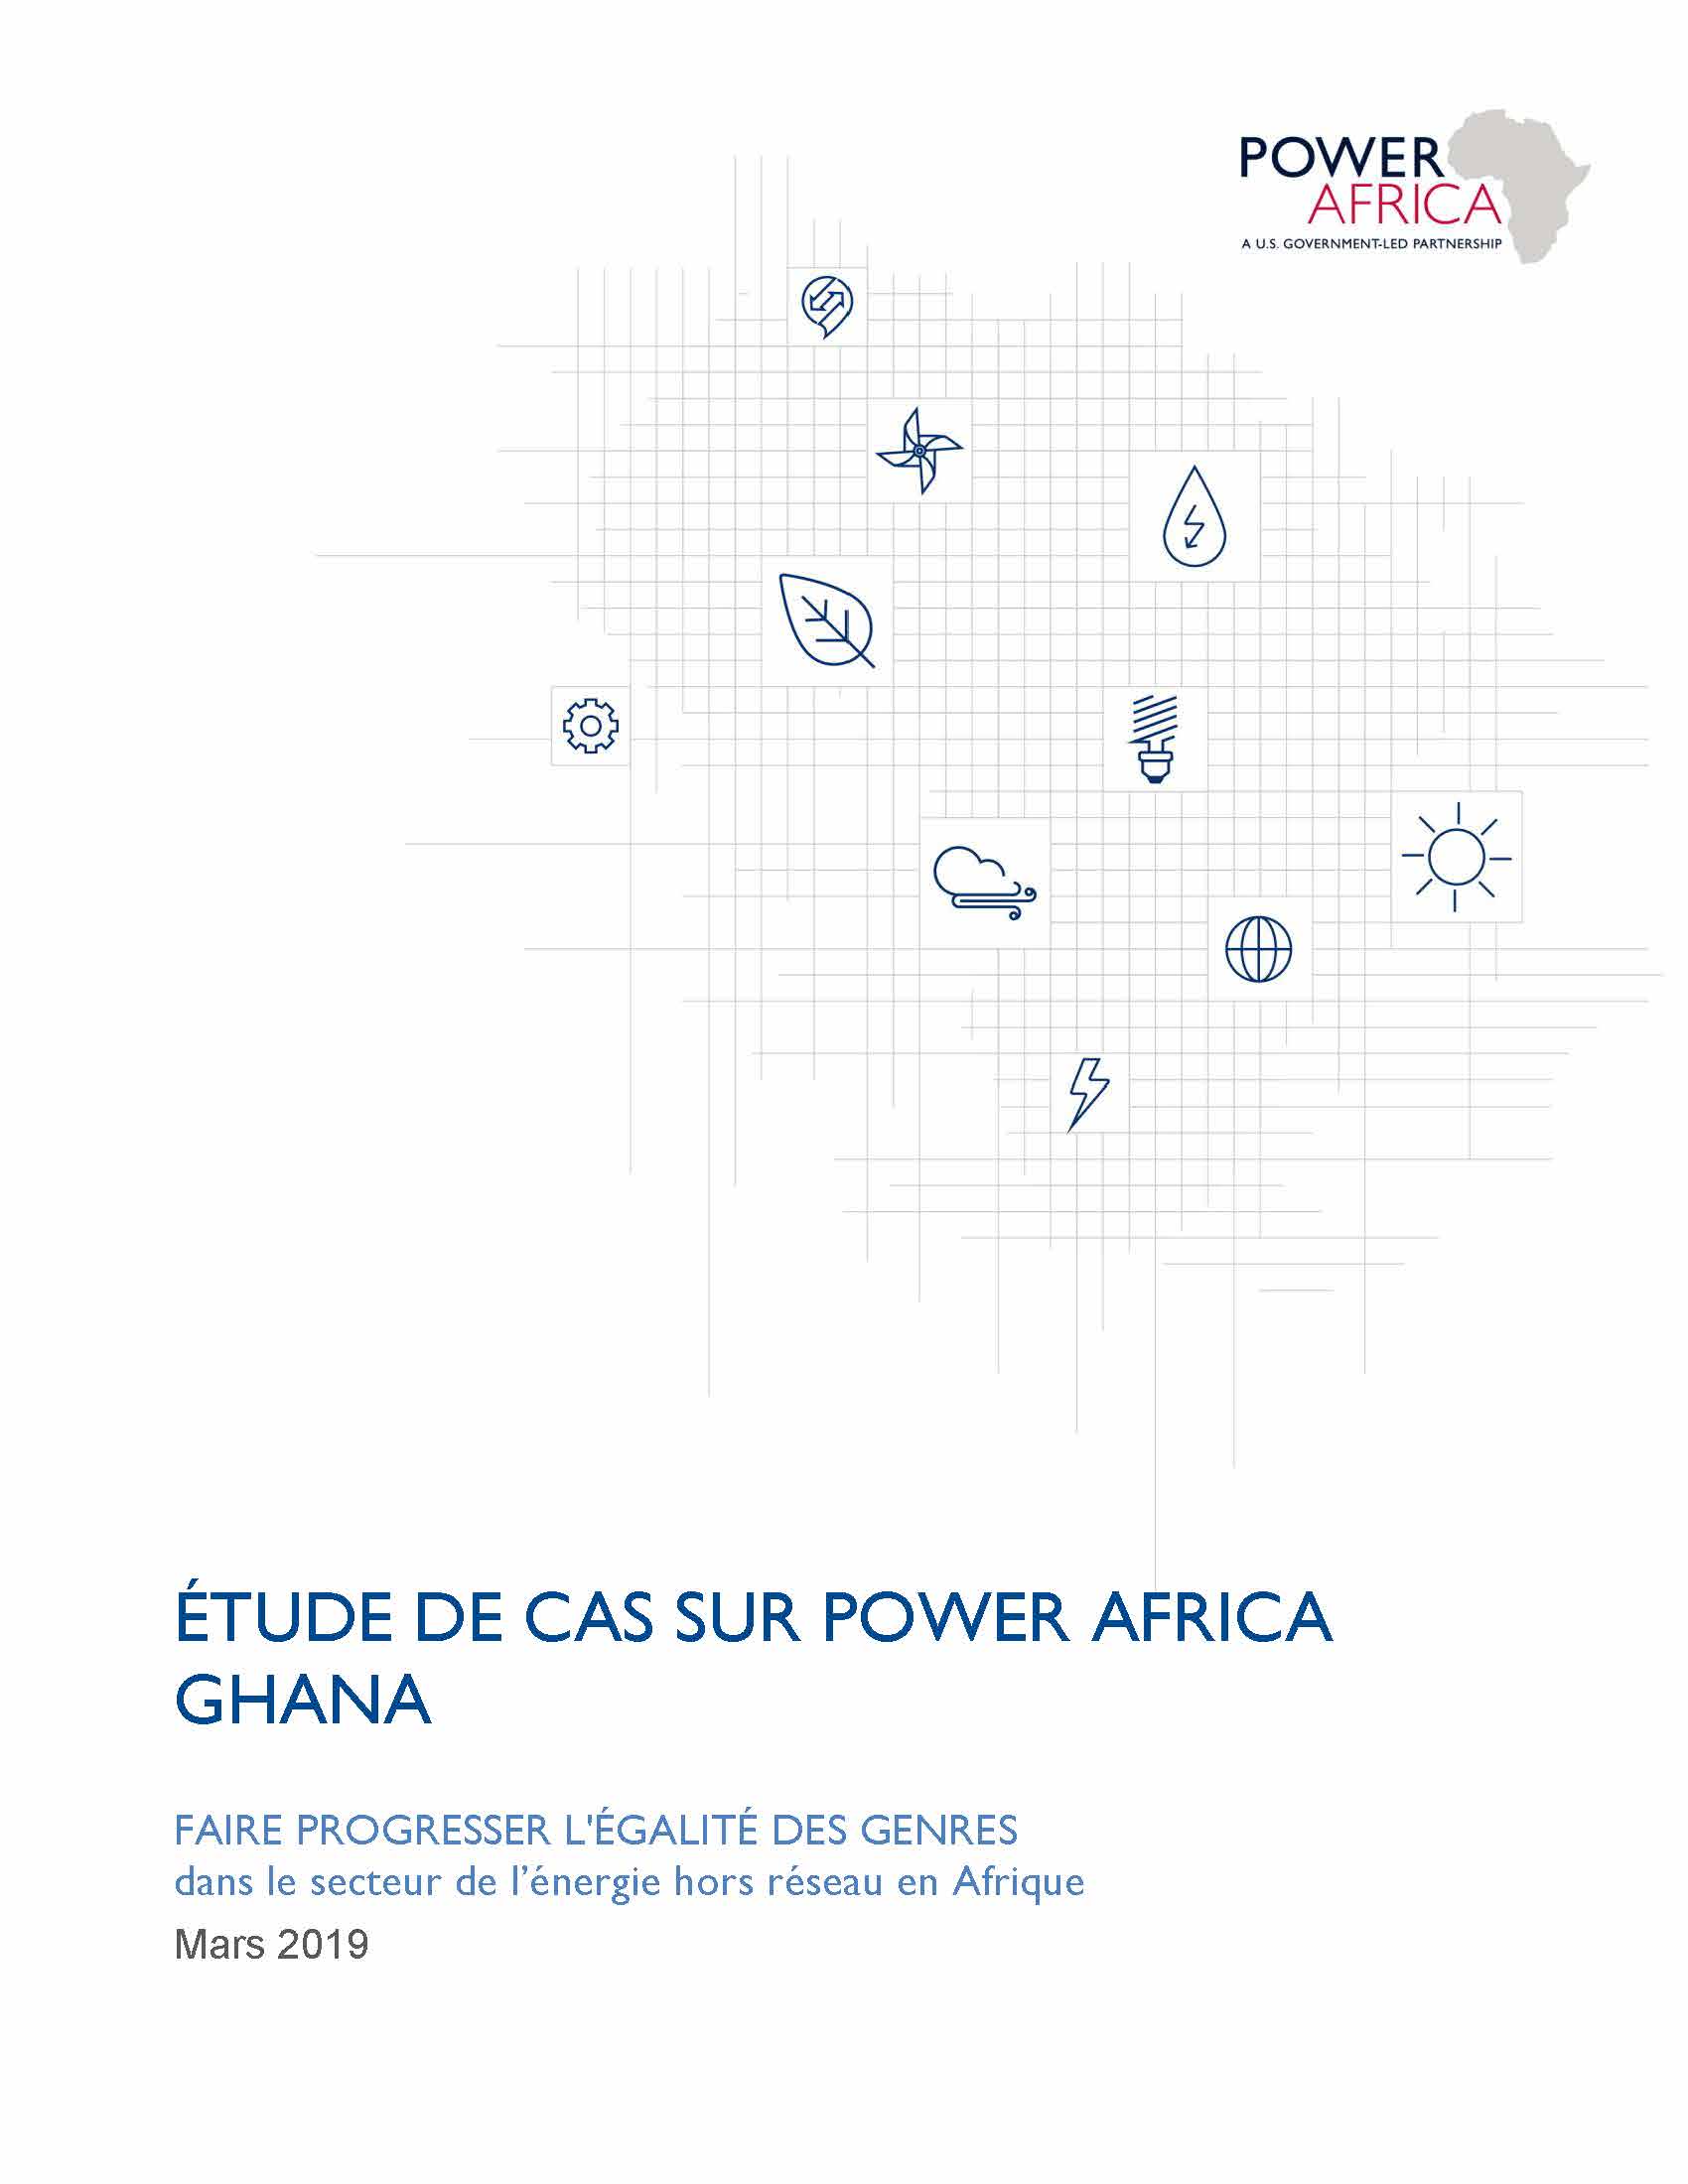 Power Africa BTG Case Study in French